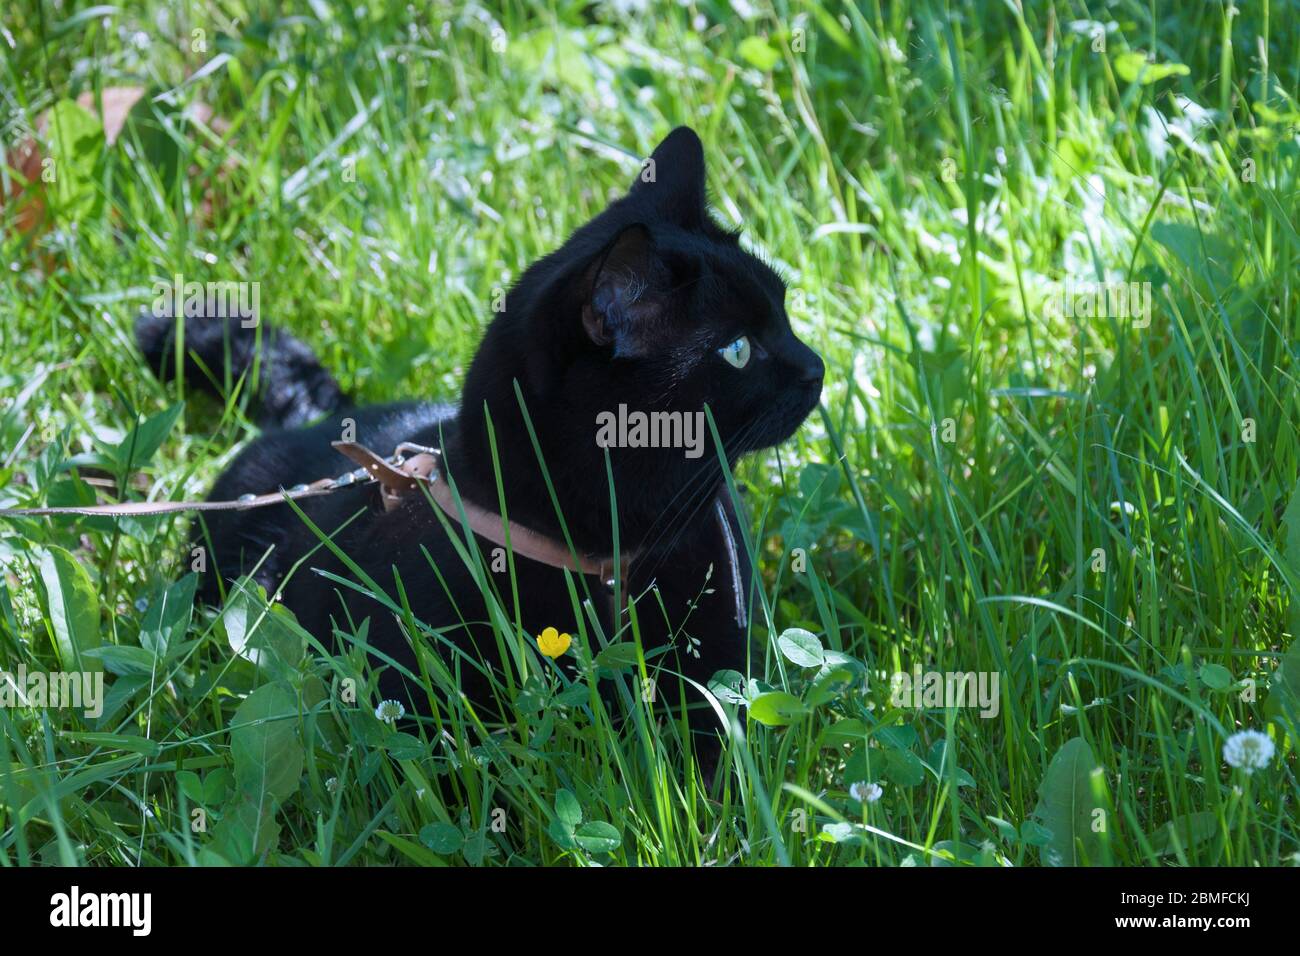 cat on leash walks in green grass Stock Photo